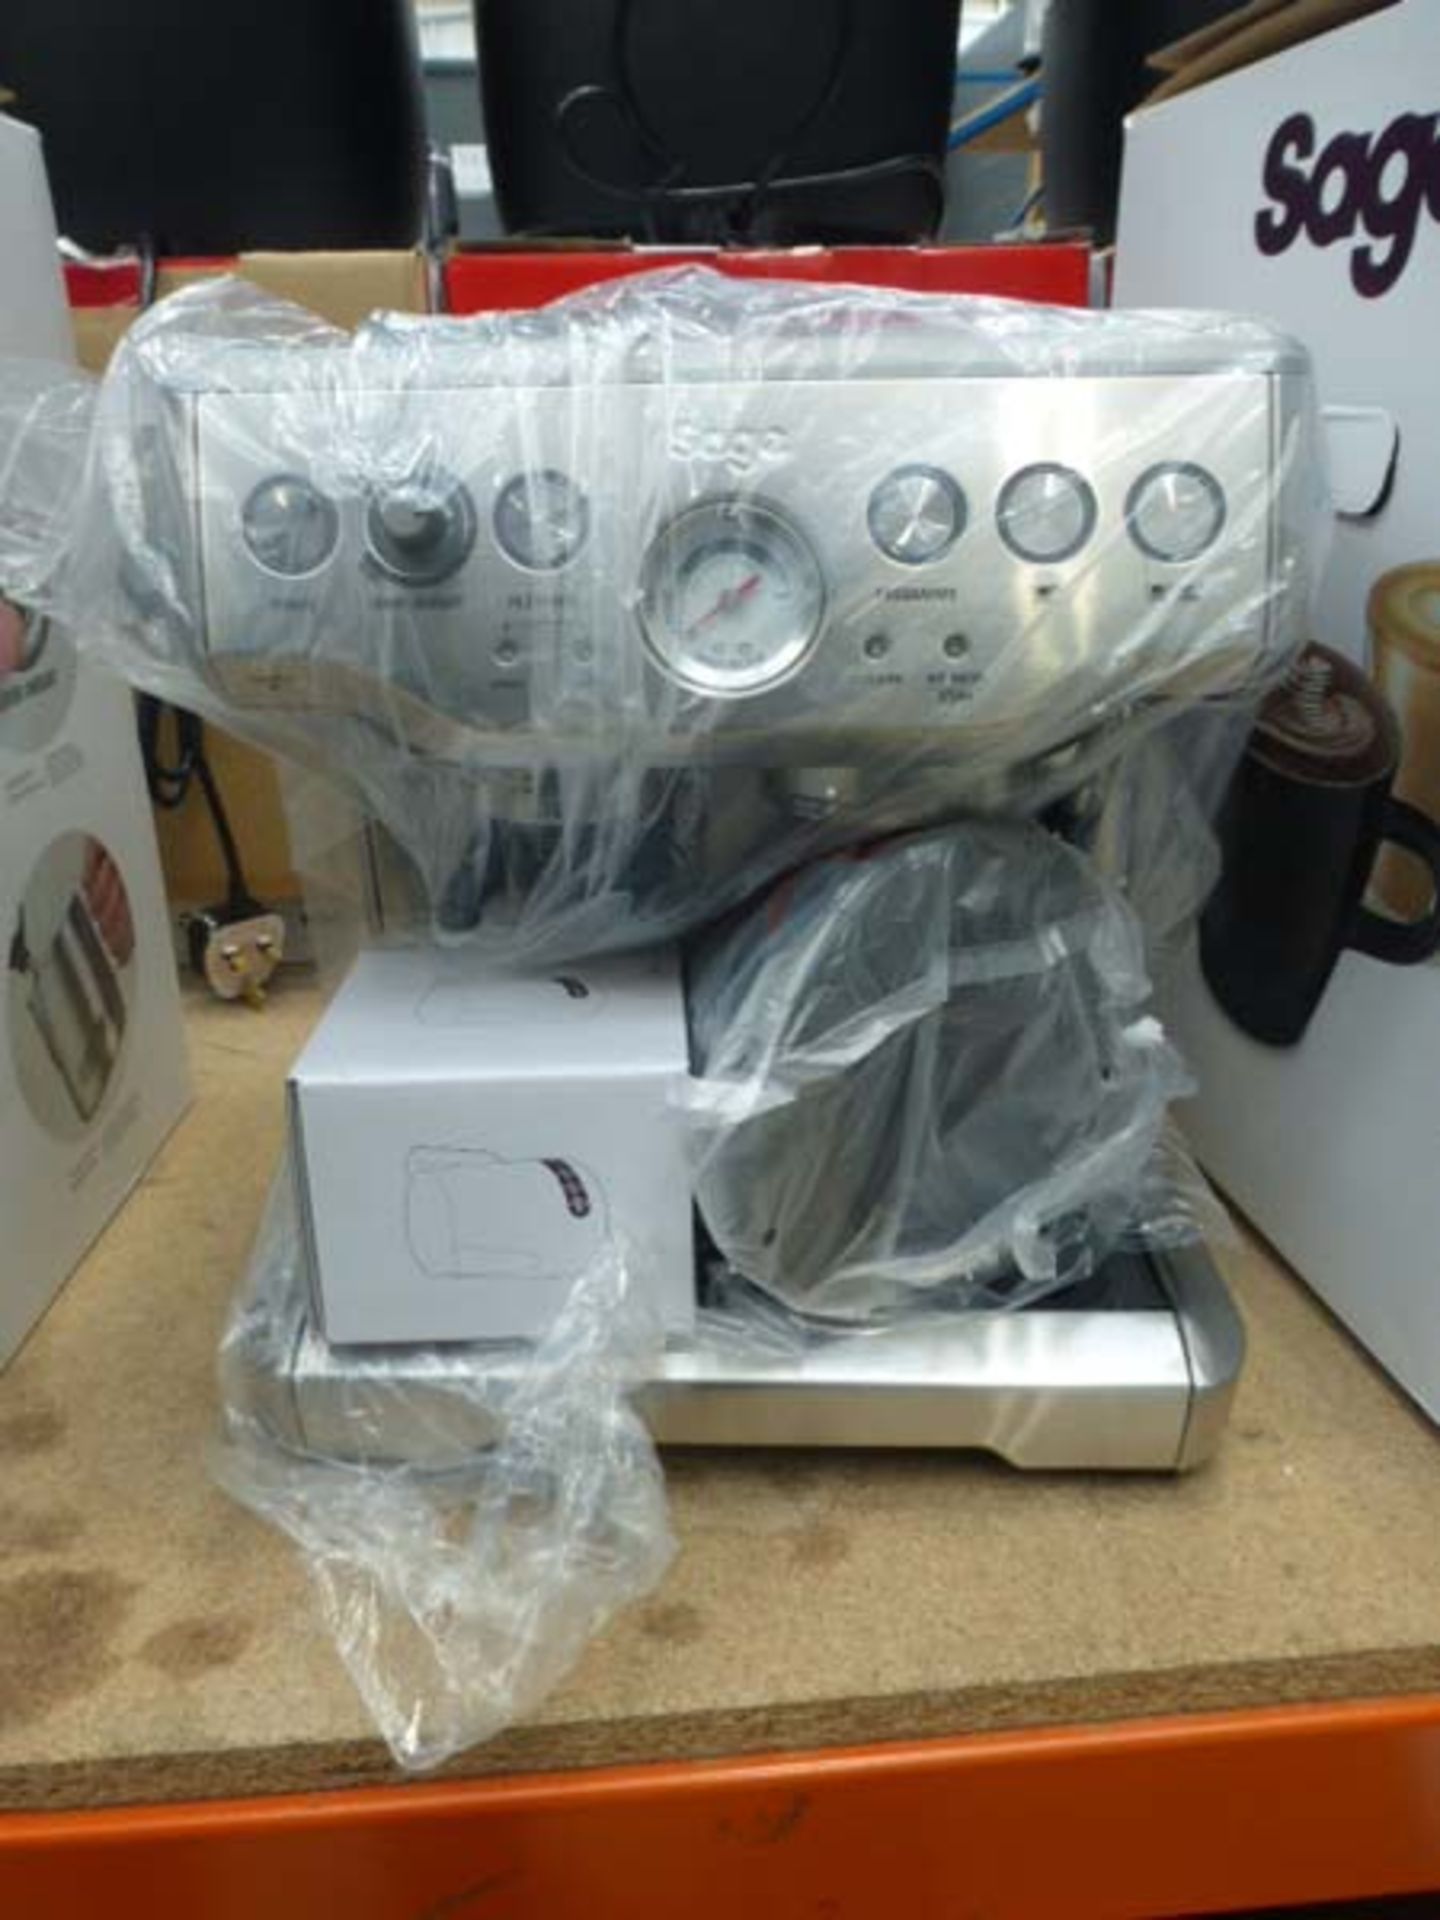 (63) Sage Barrister Express coffee machine in box